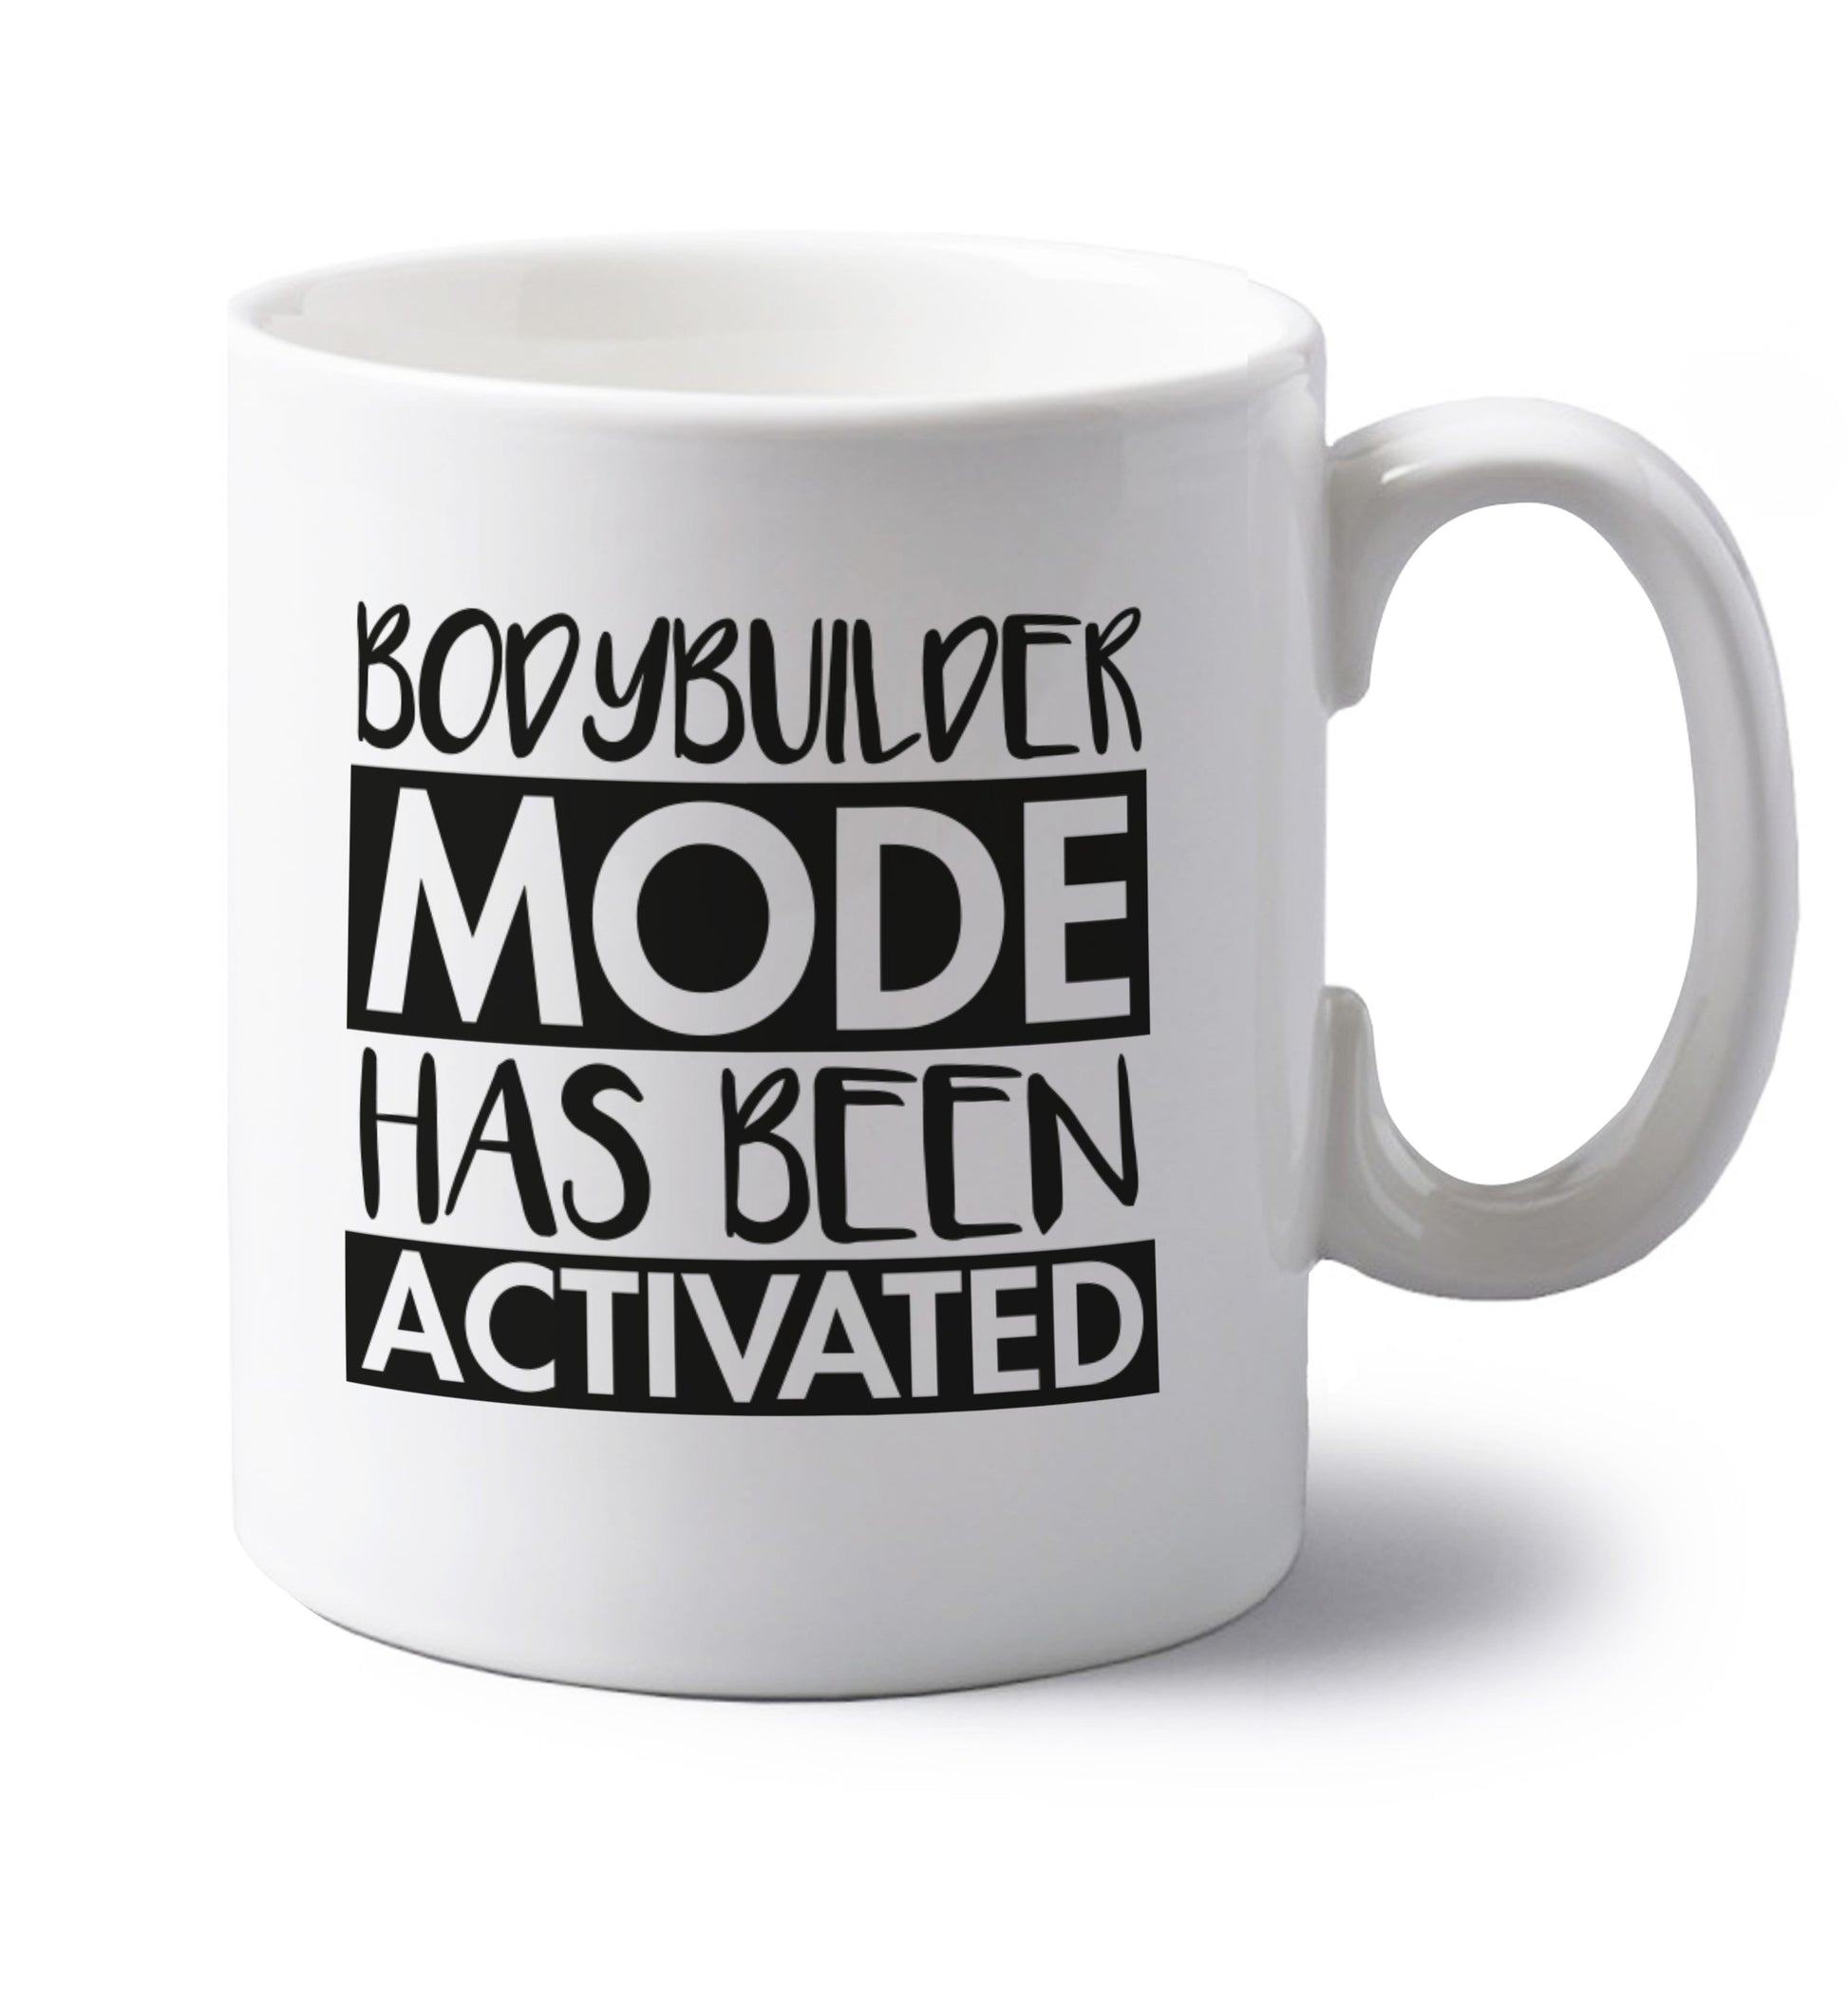 Bodybuilder mode activated left handed white ceramic mug 